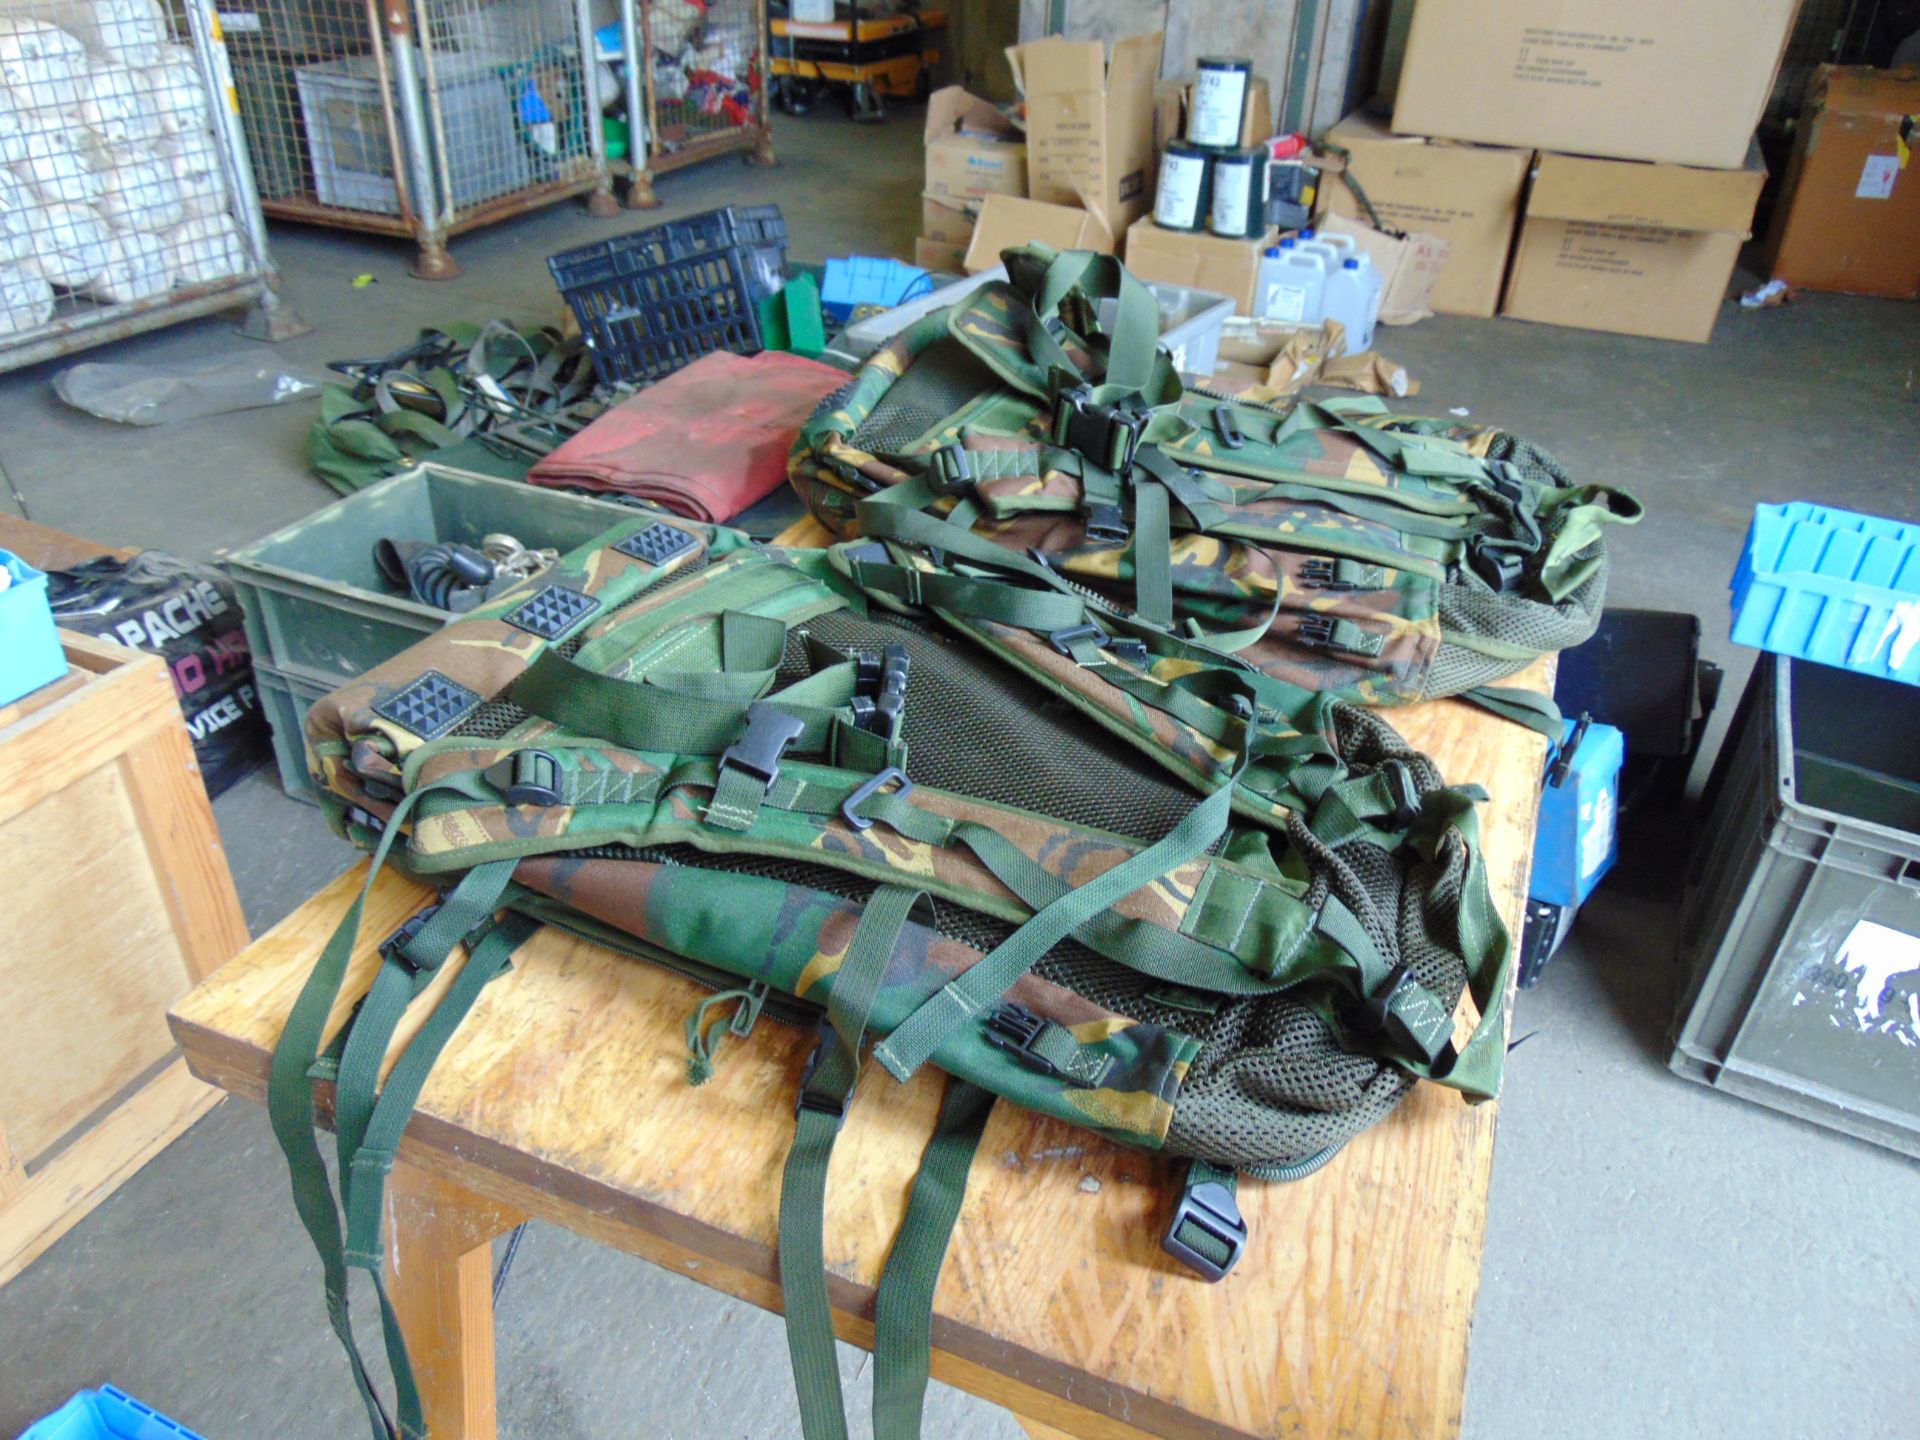 2 x New Unissued British Army DPM Rucksacks c/w Straps - Image 4 of 5